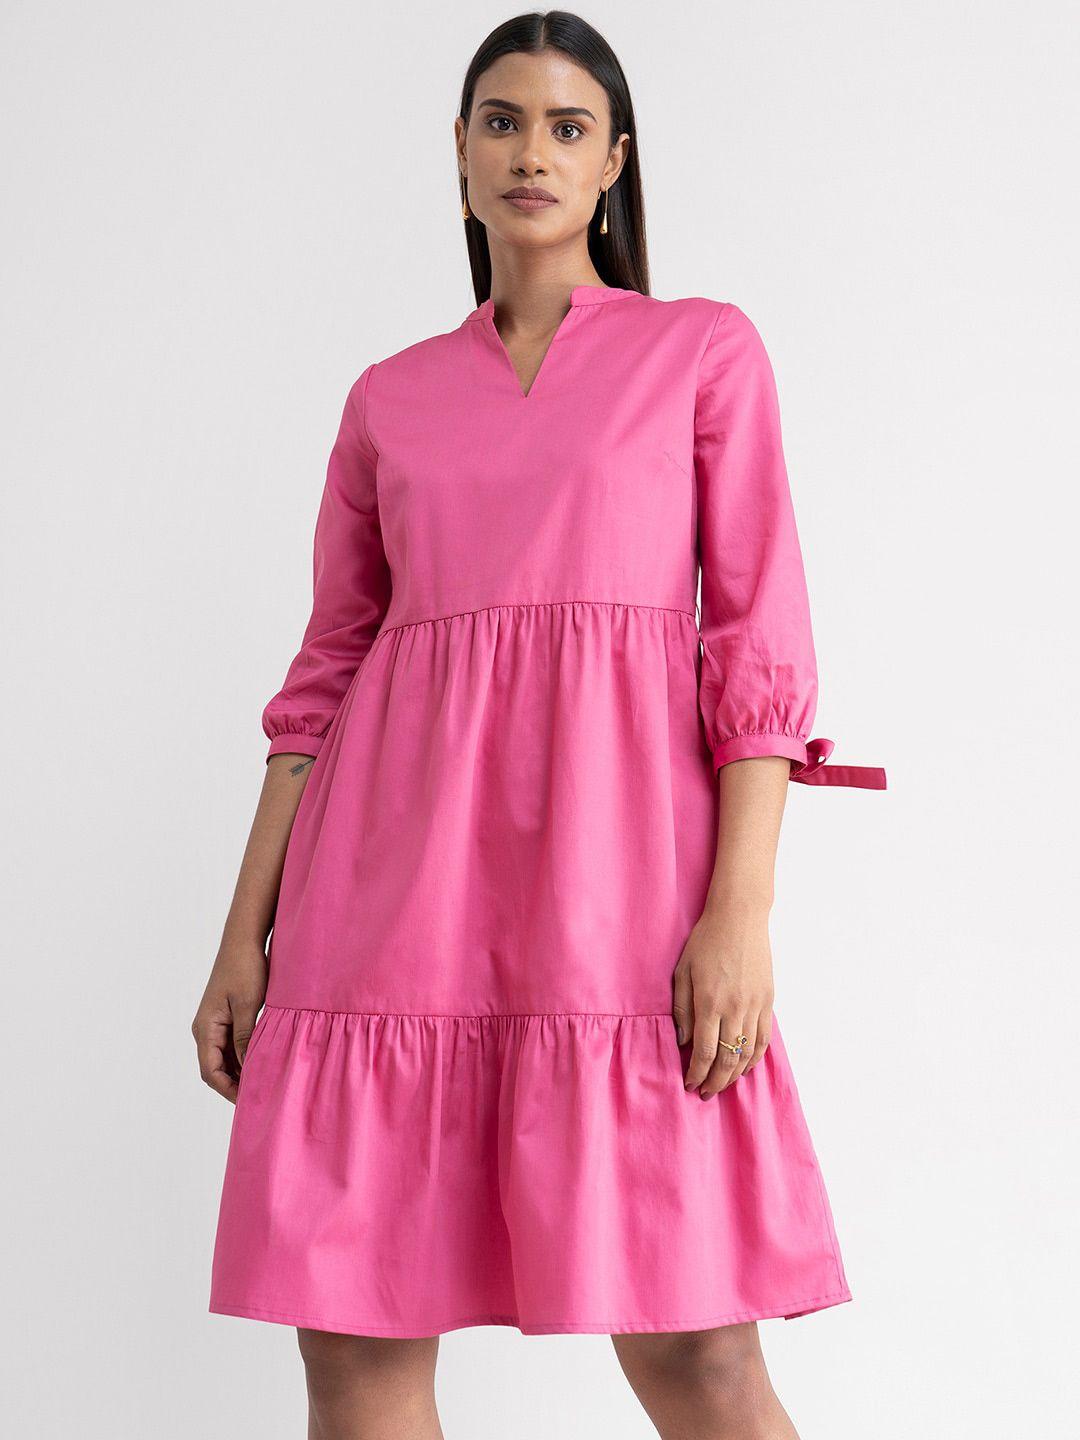 fablestreet pink formal a-line dress